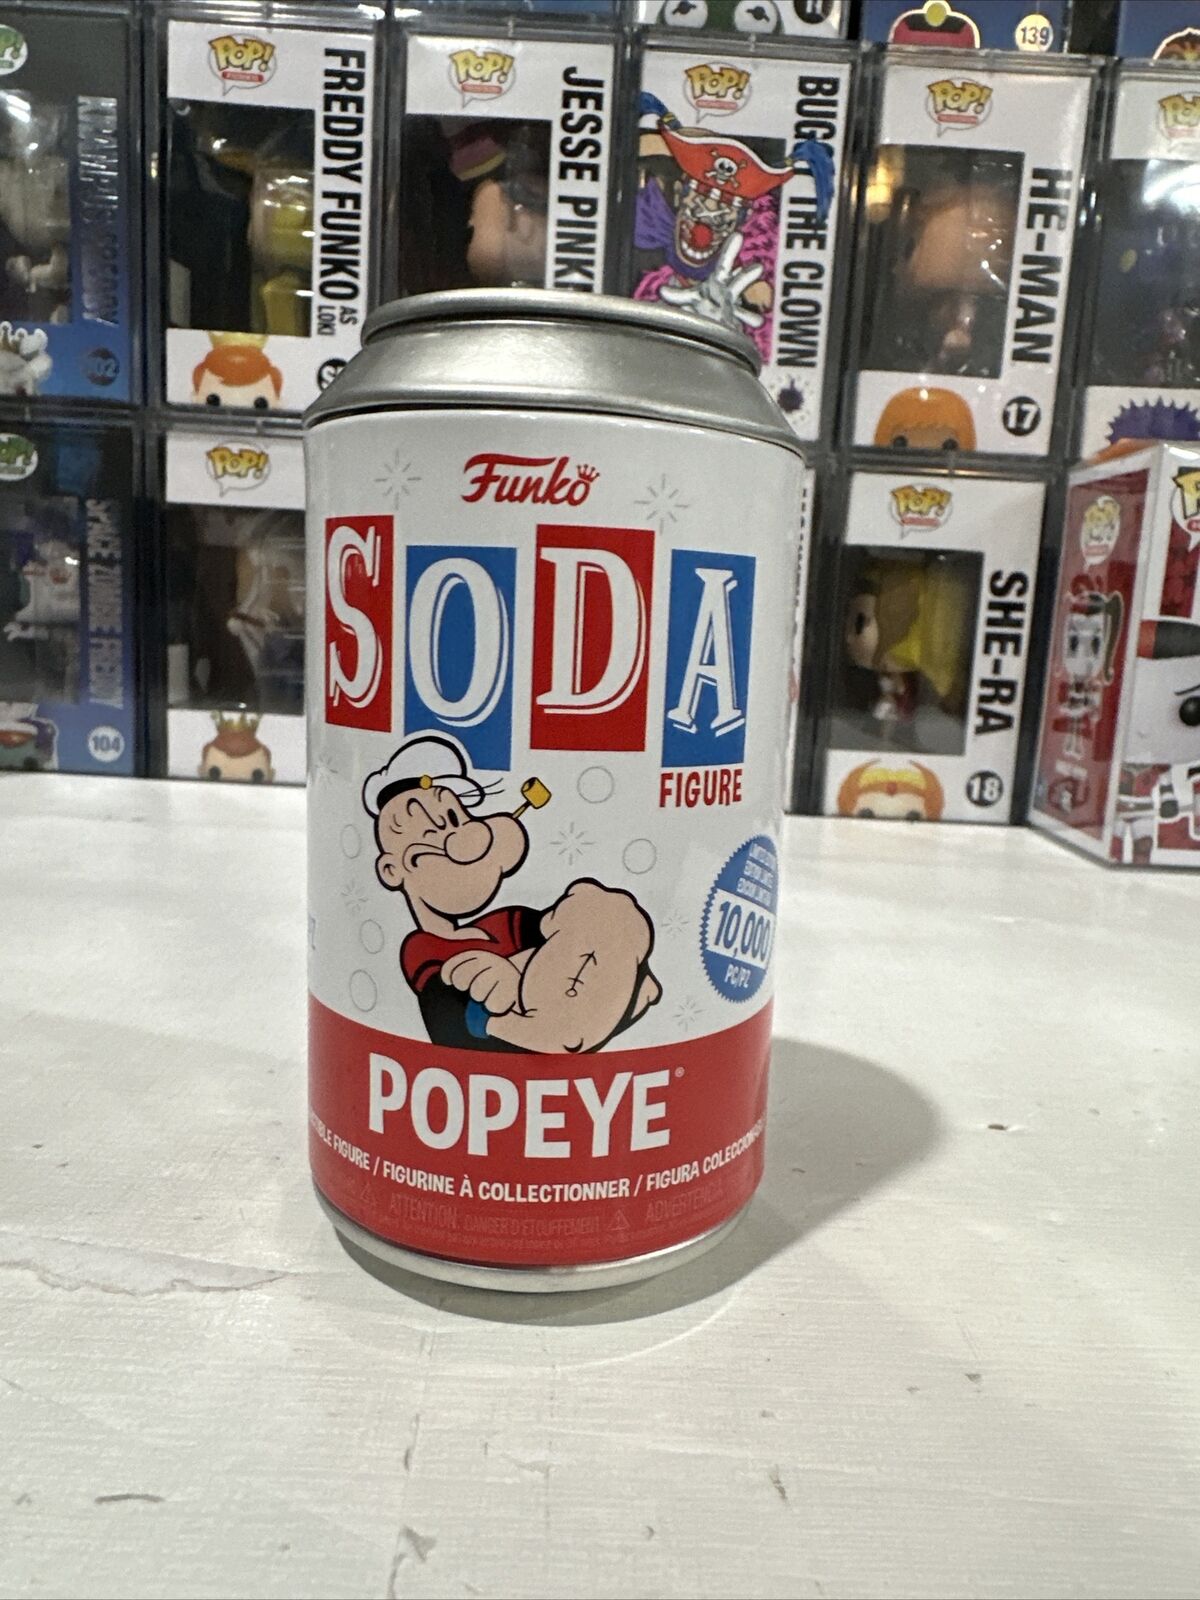 Funko SOda Popeye Chase Limited Edition 1/1600 PCS